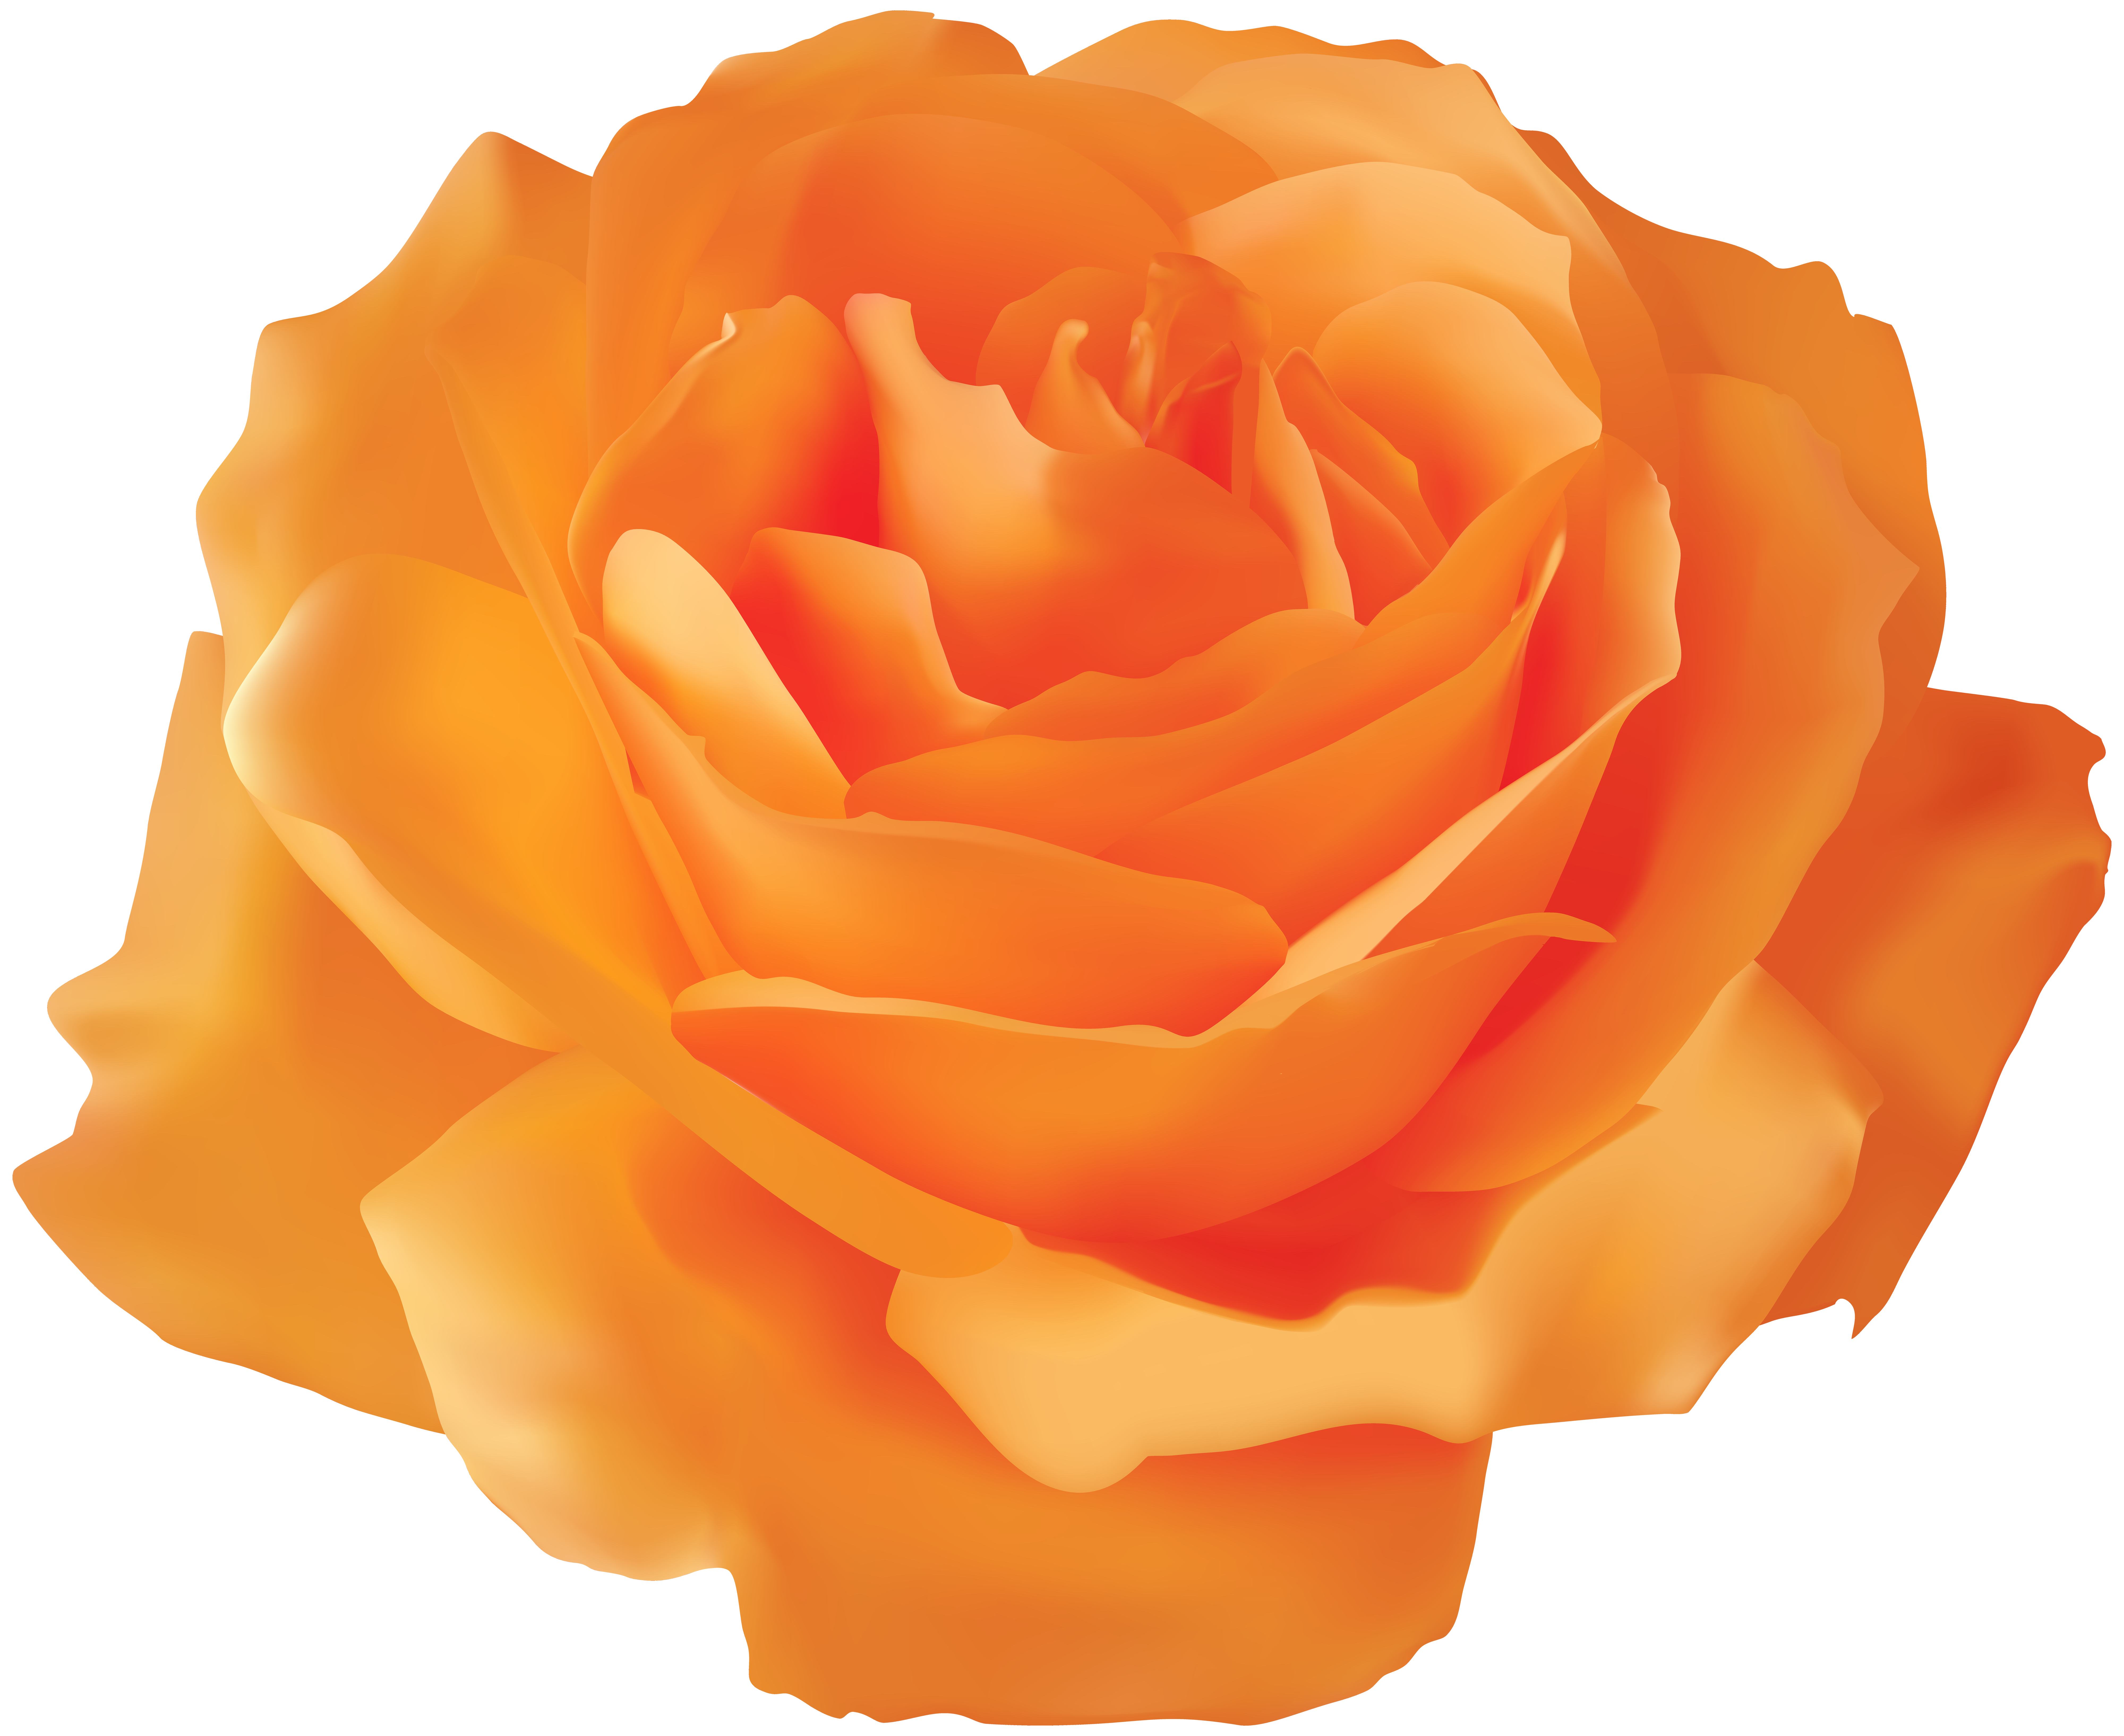 Orange Rose Transparent PNG Clip Art Image | Gallery Yopriceville ...